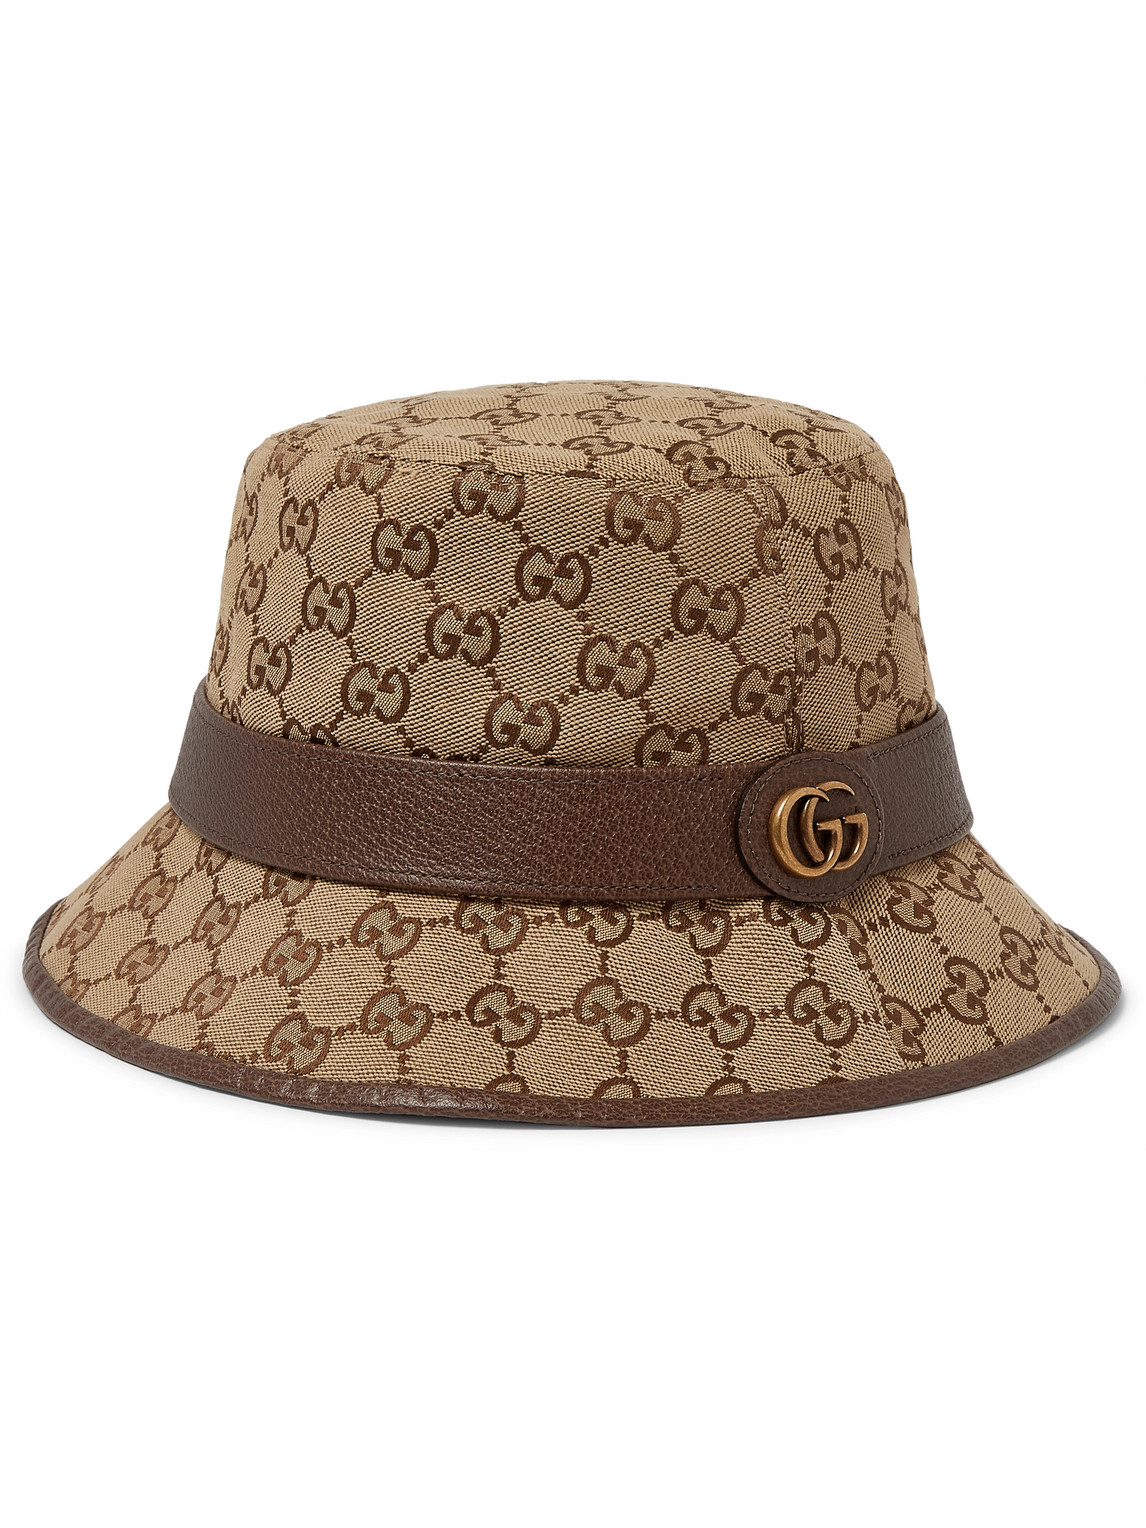 Gucci - Leather-Trimmed Monogrammed Canvas Bucket Hat - Men - Brown - S for  Men